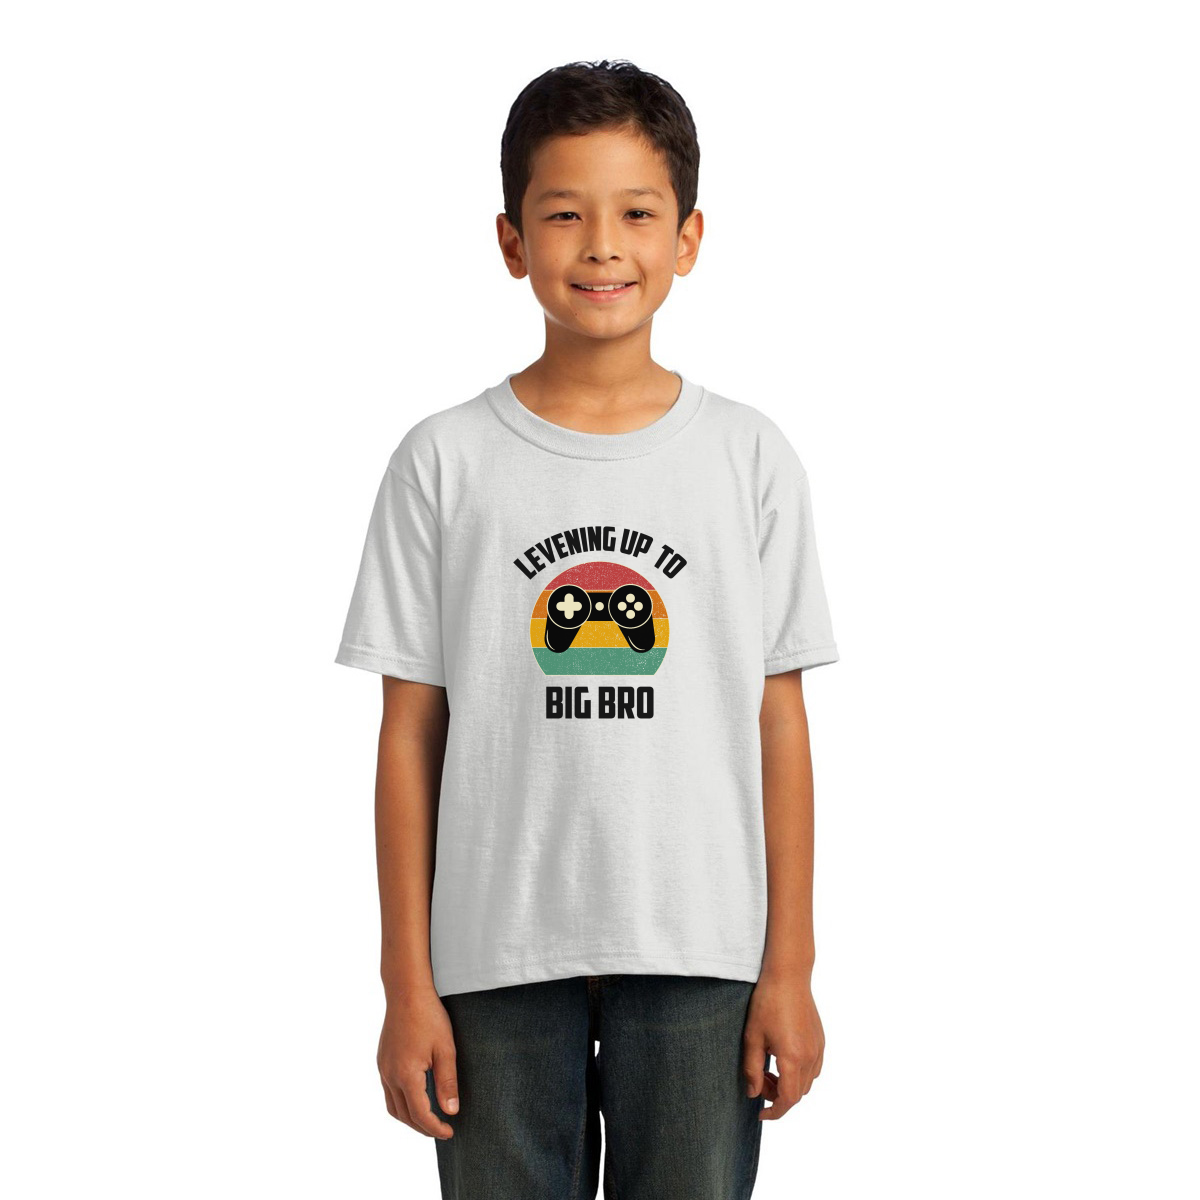 Leveling Up To Big Bro-2 Kids T-shirt | White